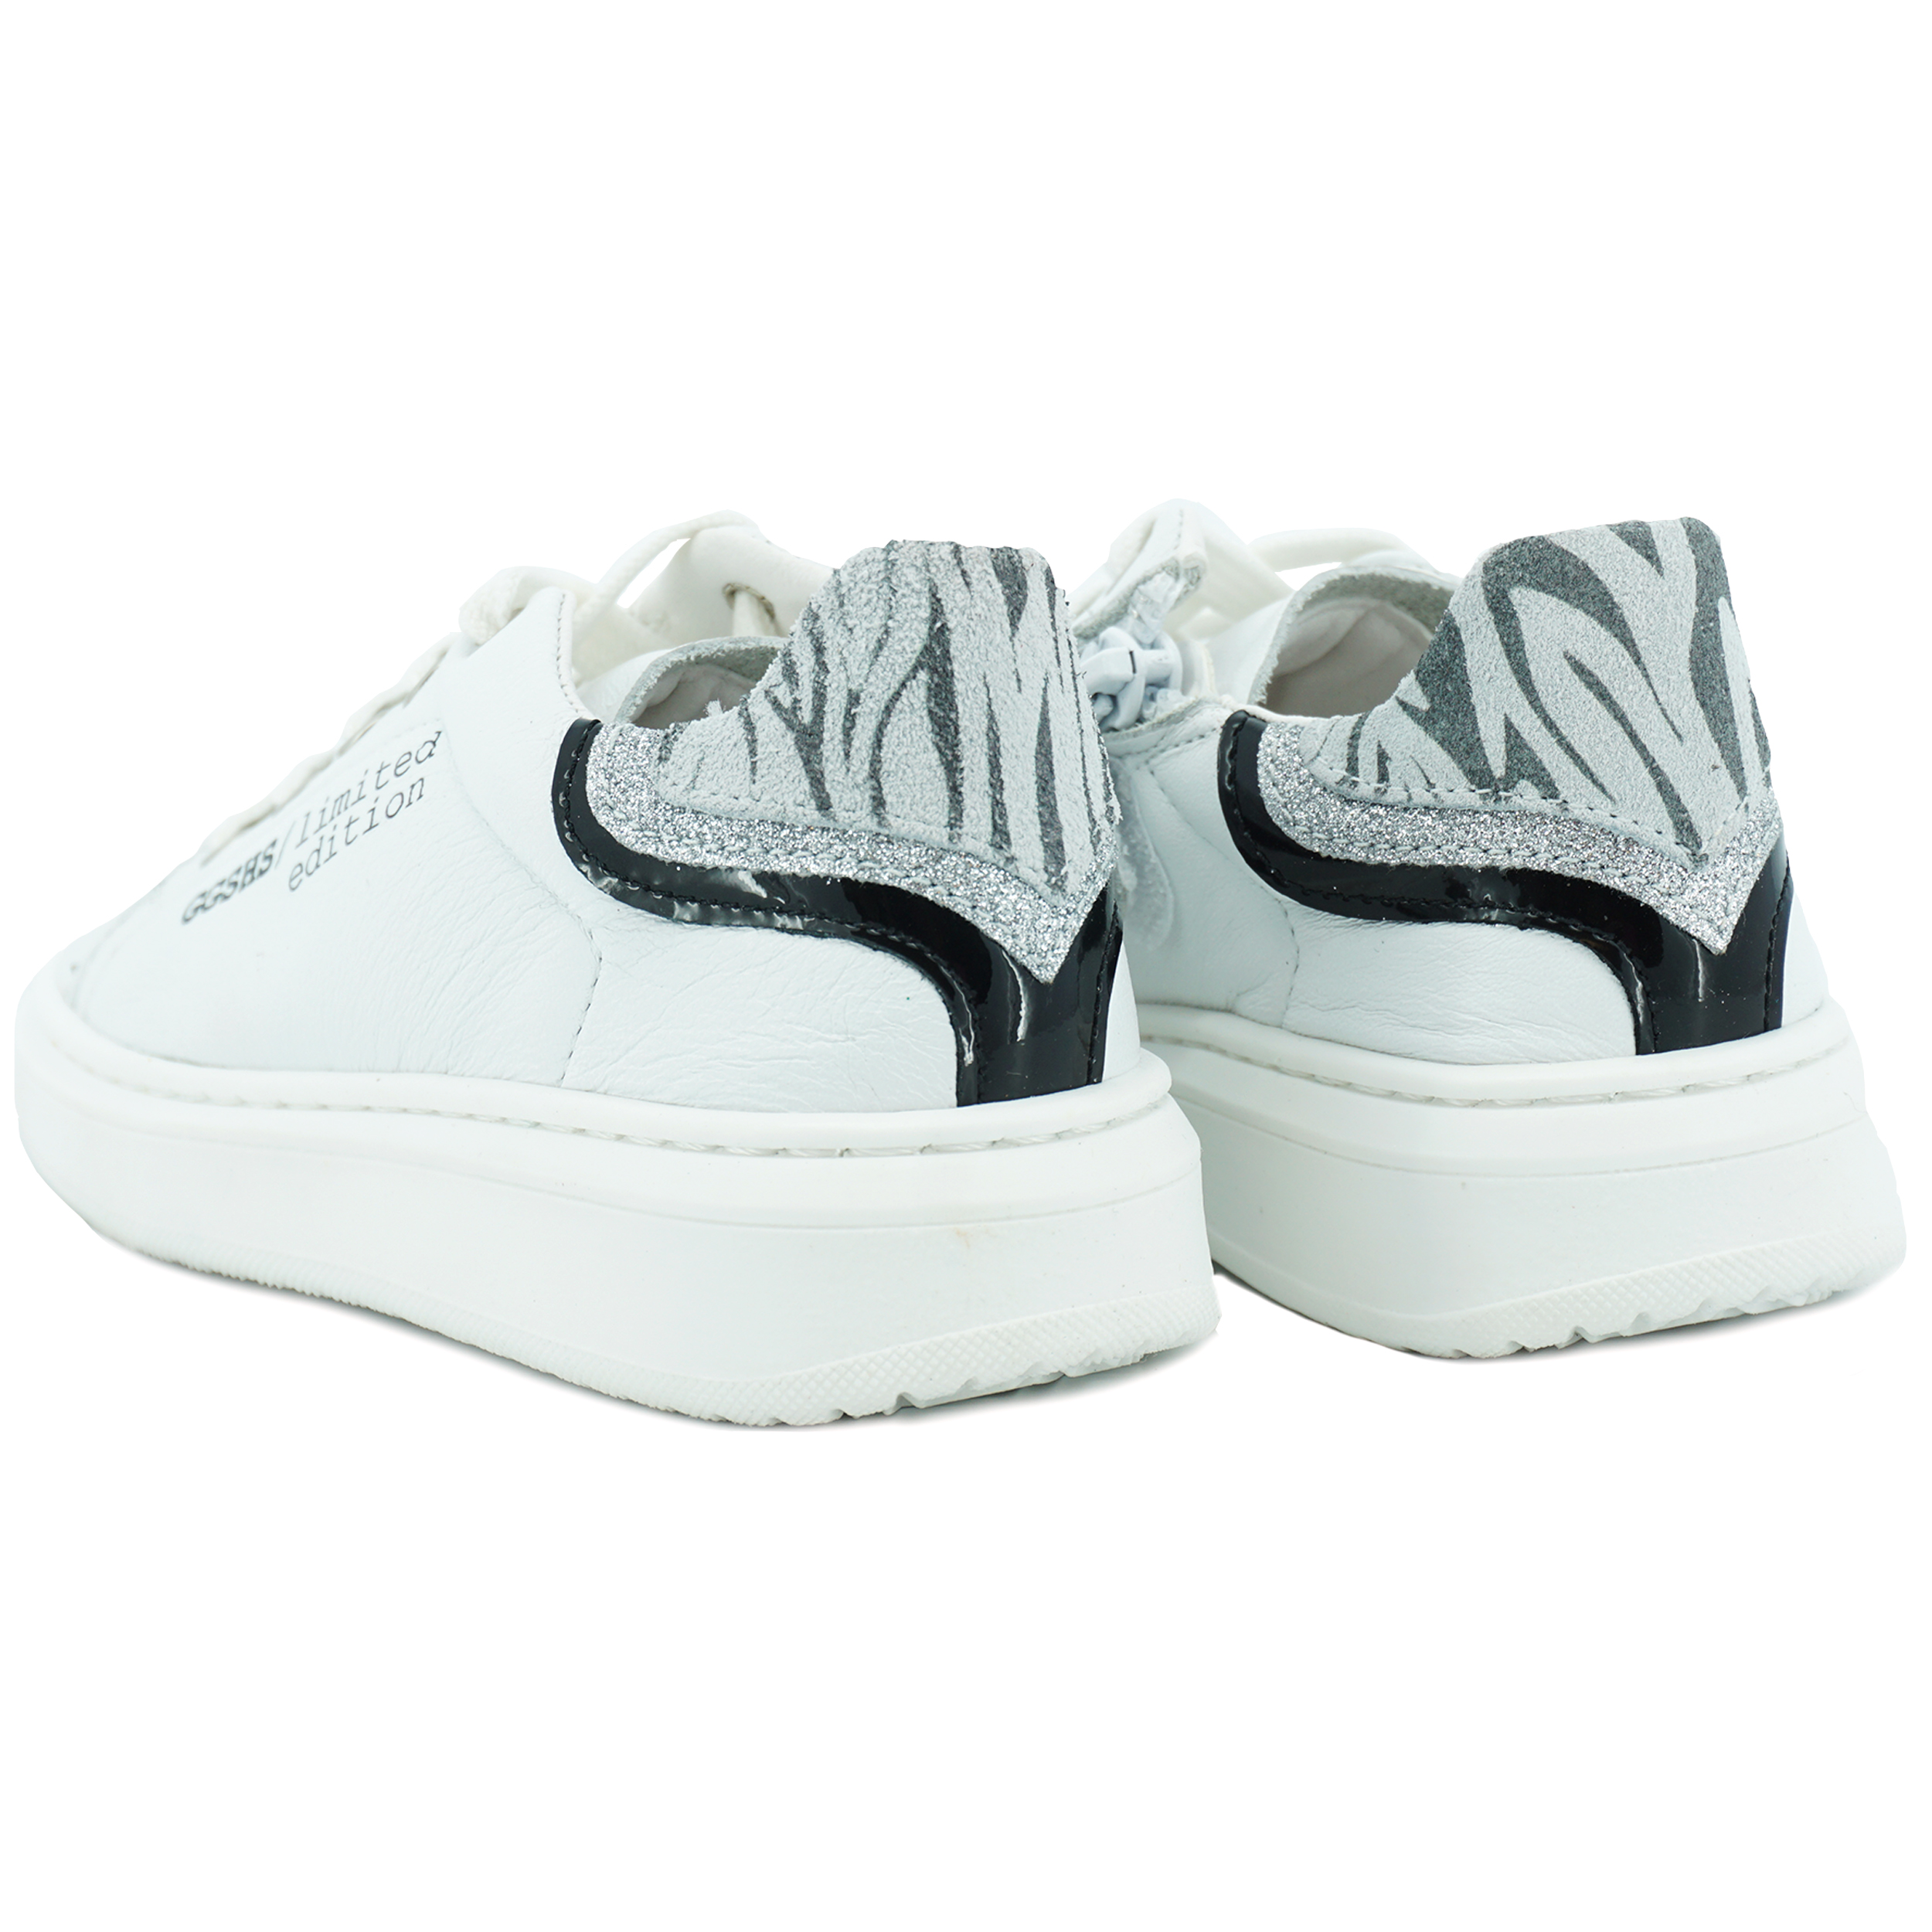 Giga G3706 Sneaker White/Zebra